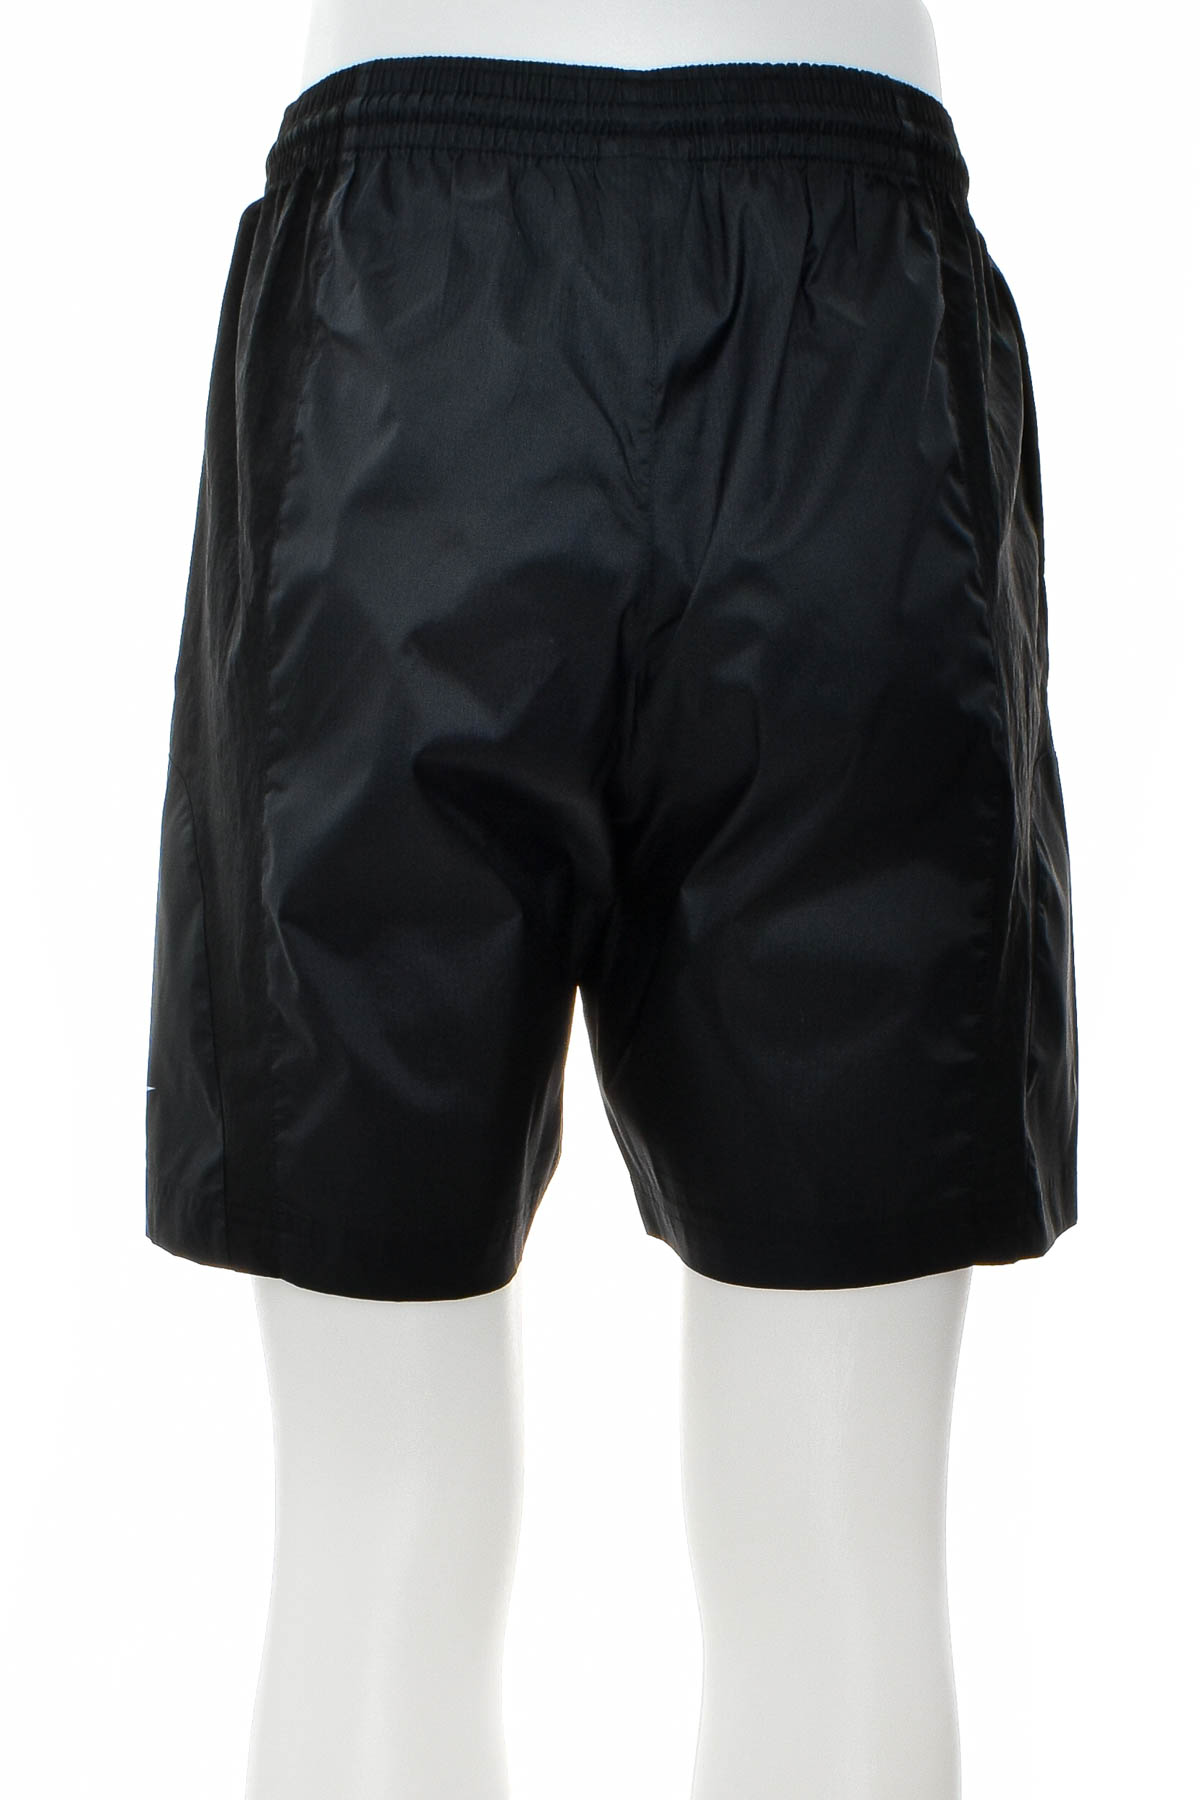 Men's shorts - Reebok - 1